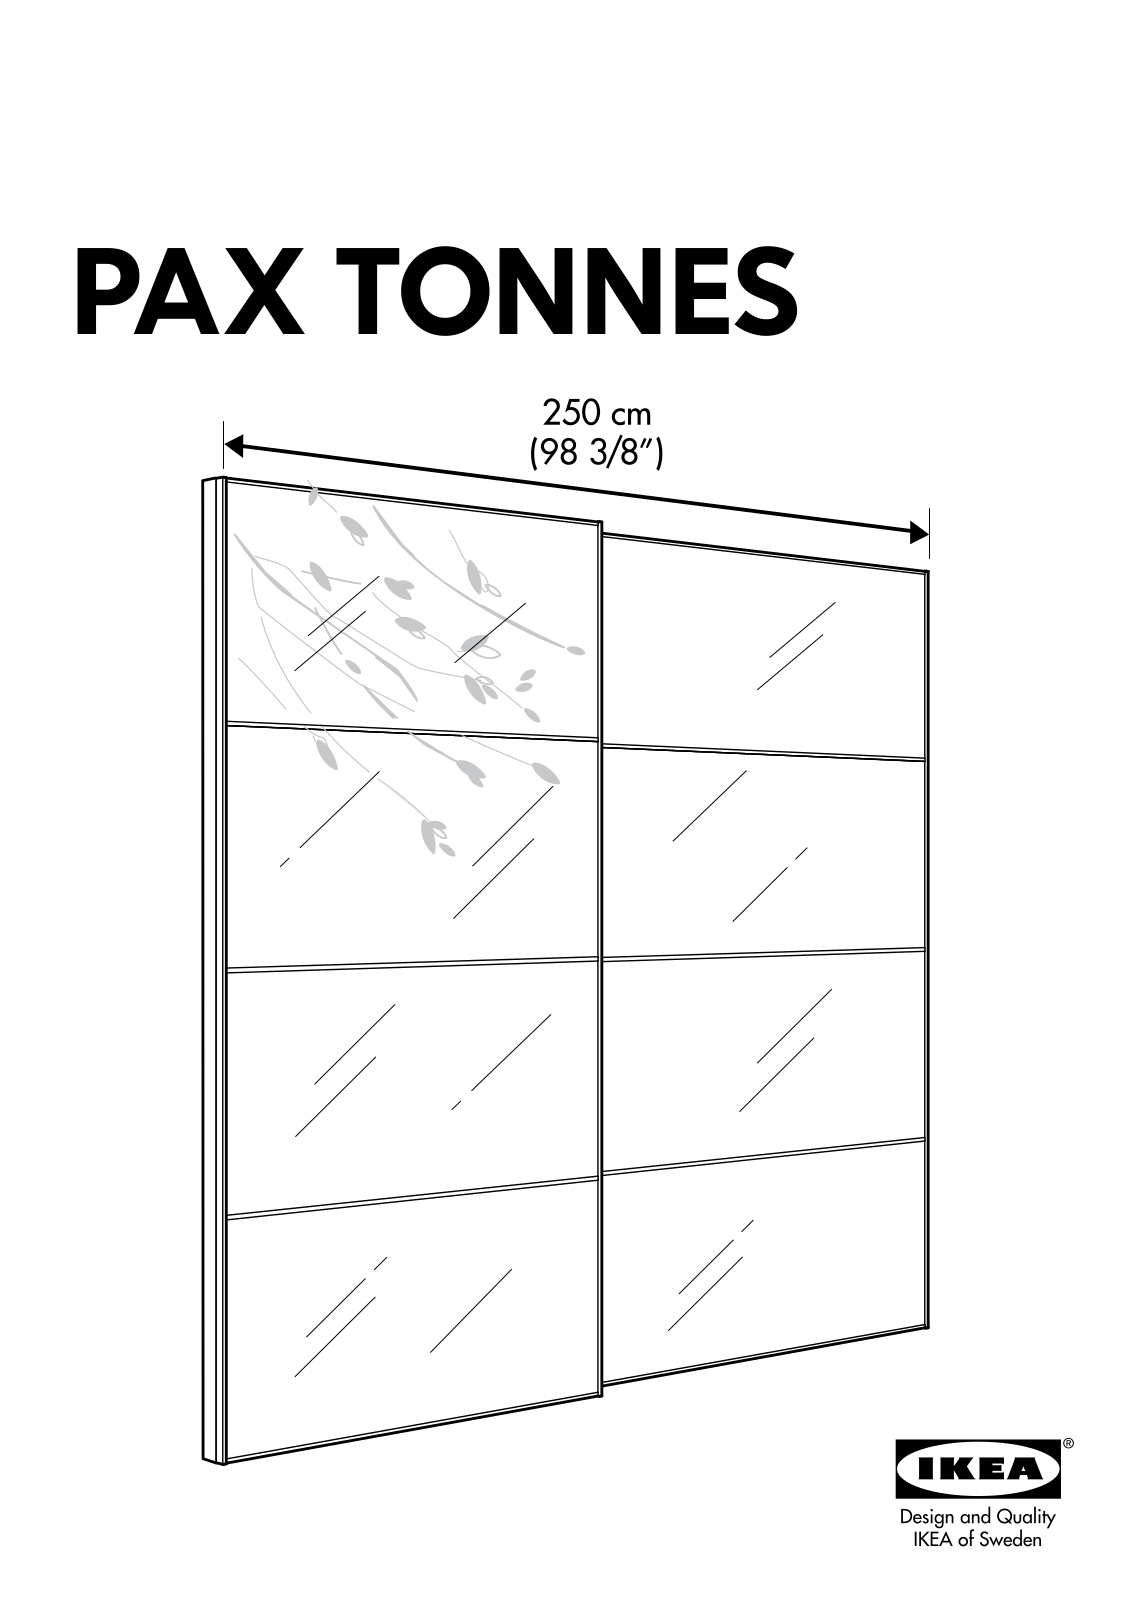 IKEA PAX TONNES SLIDING DOORS 98X93 Assembly Instruction